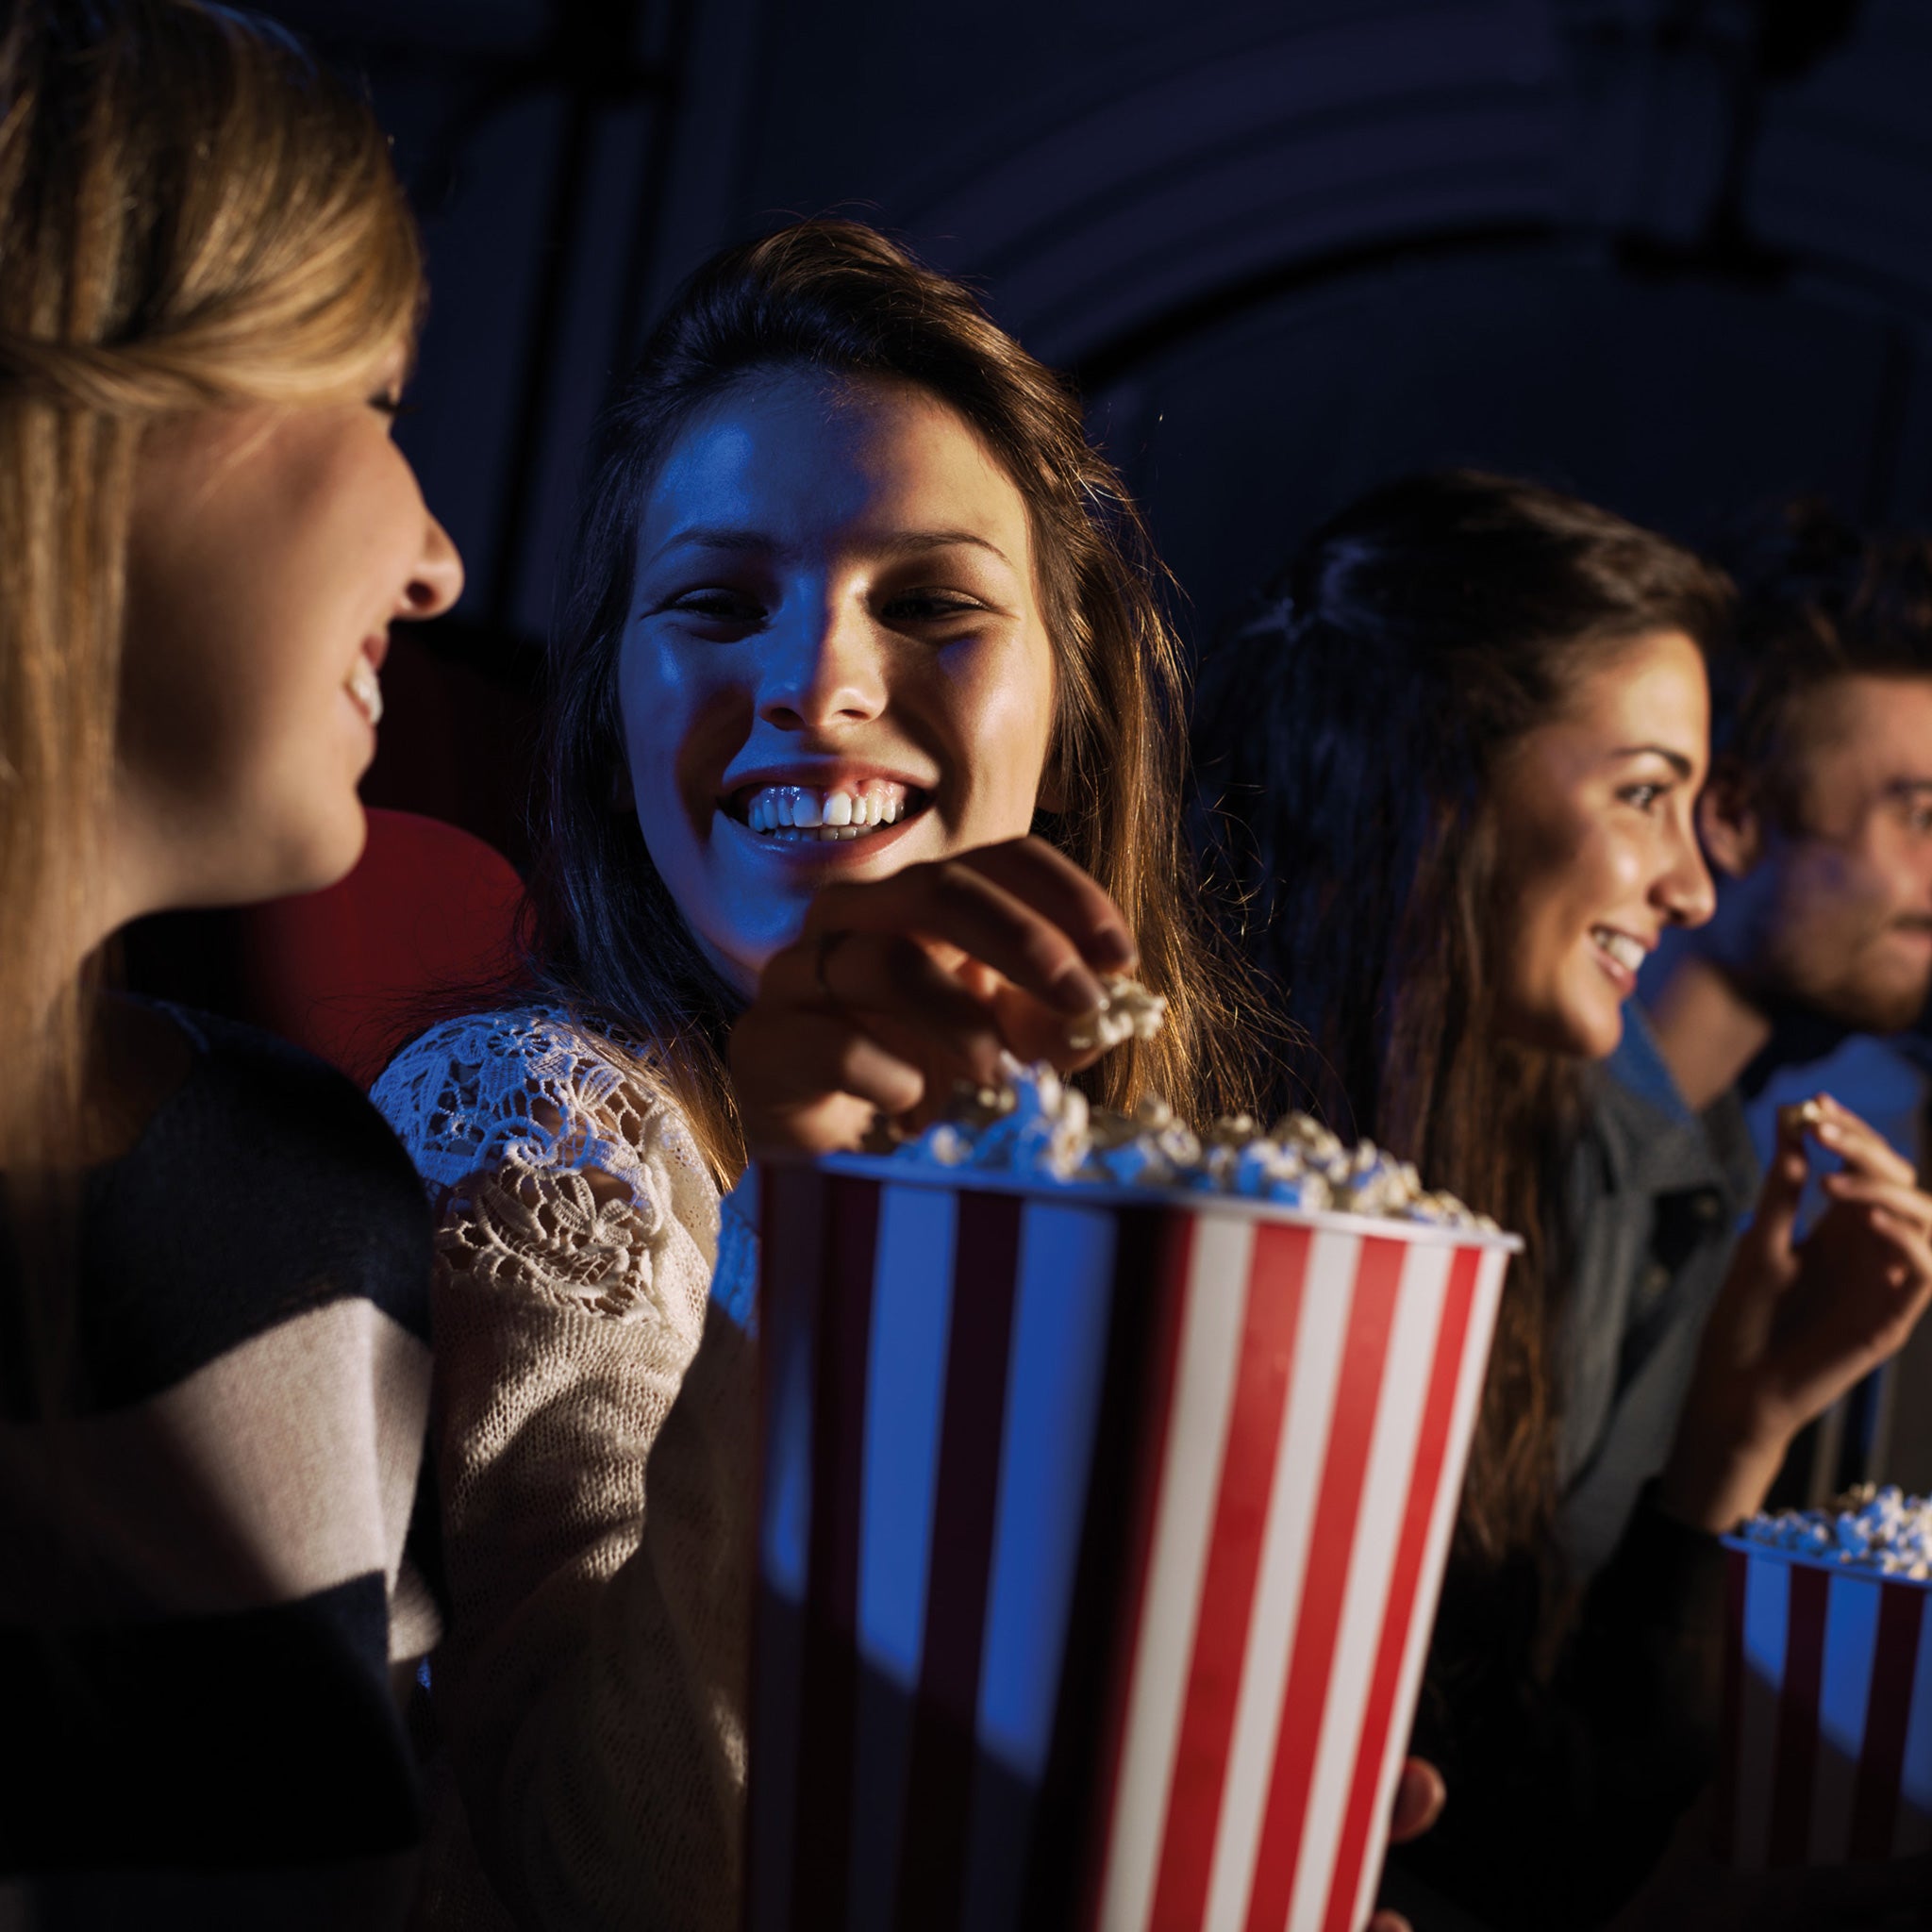 85oz Cinema-Style Popcorn Tubs